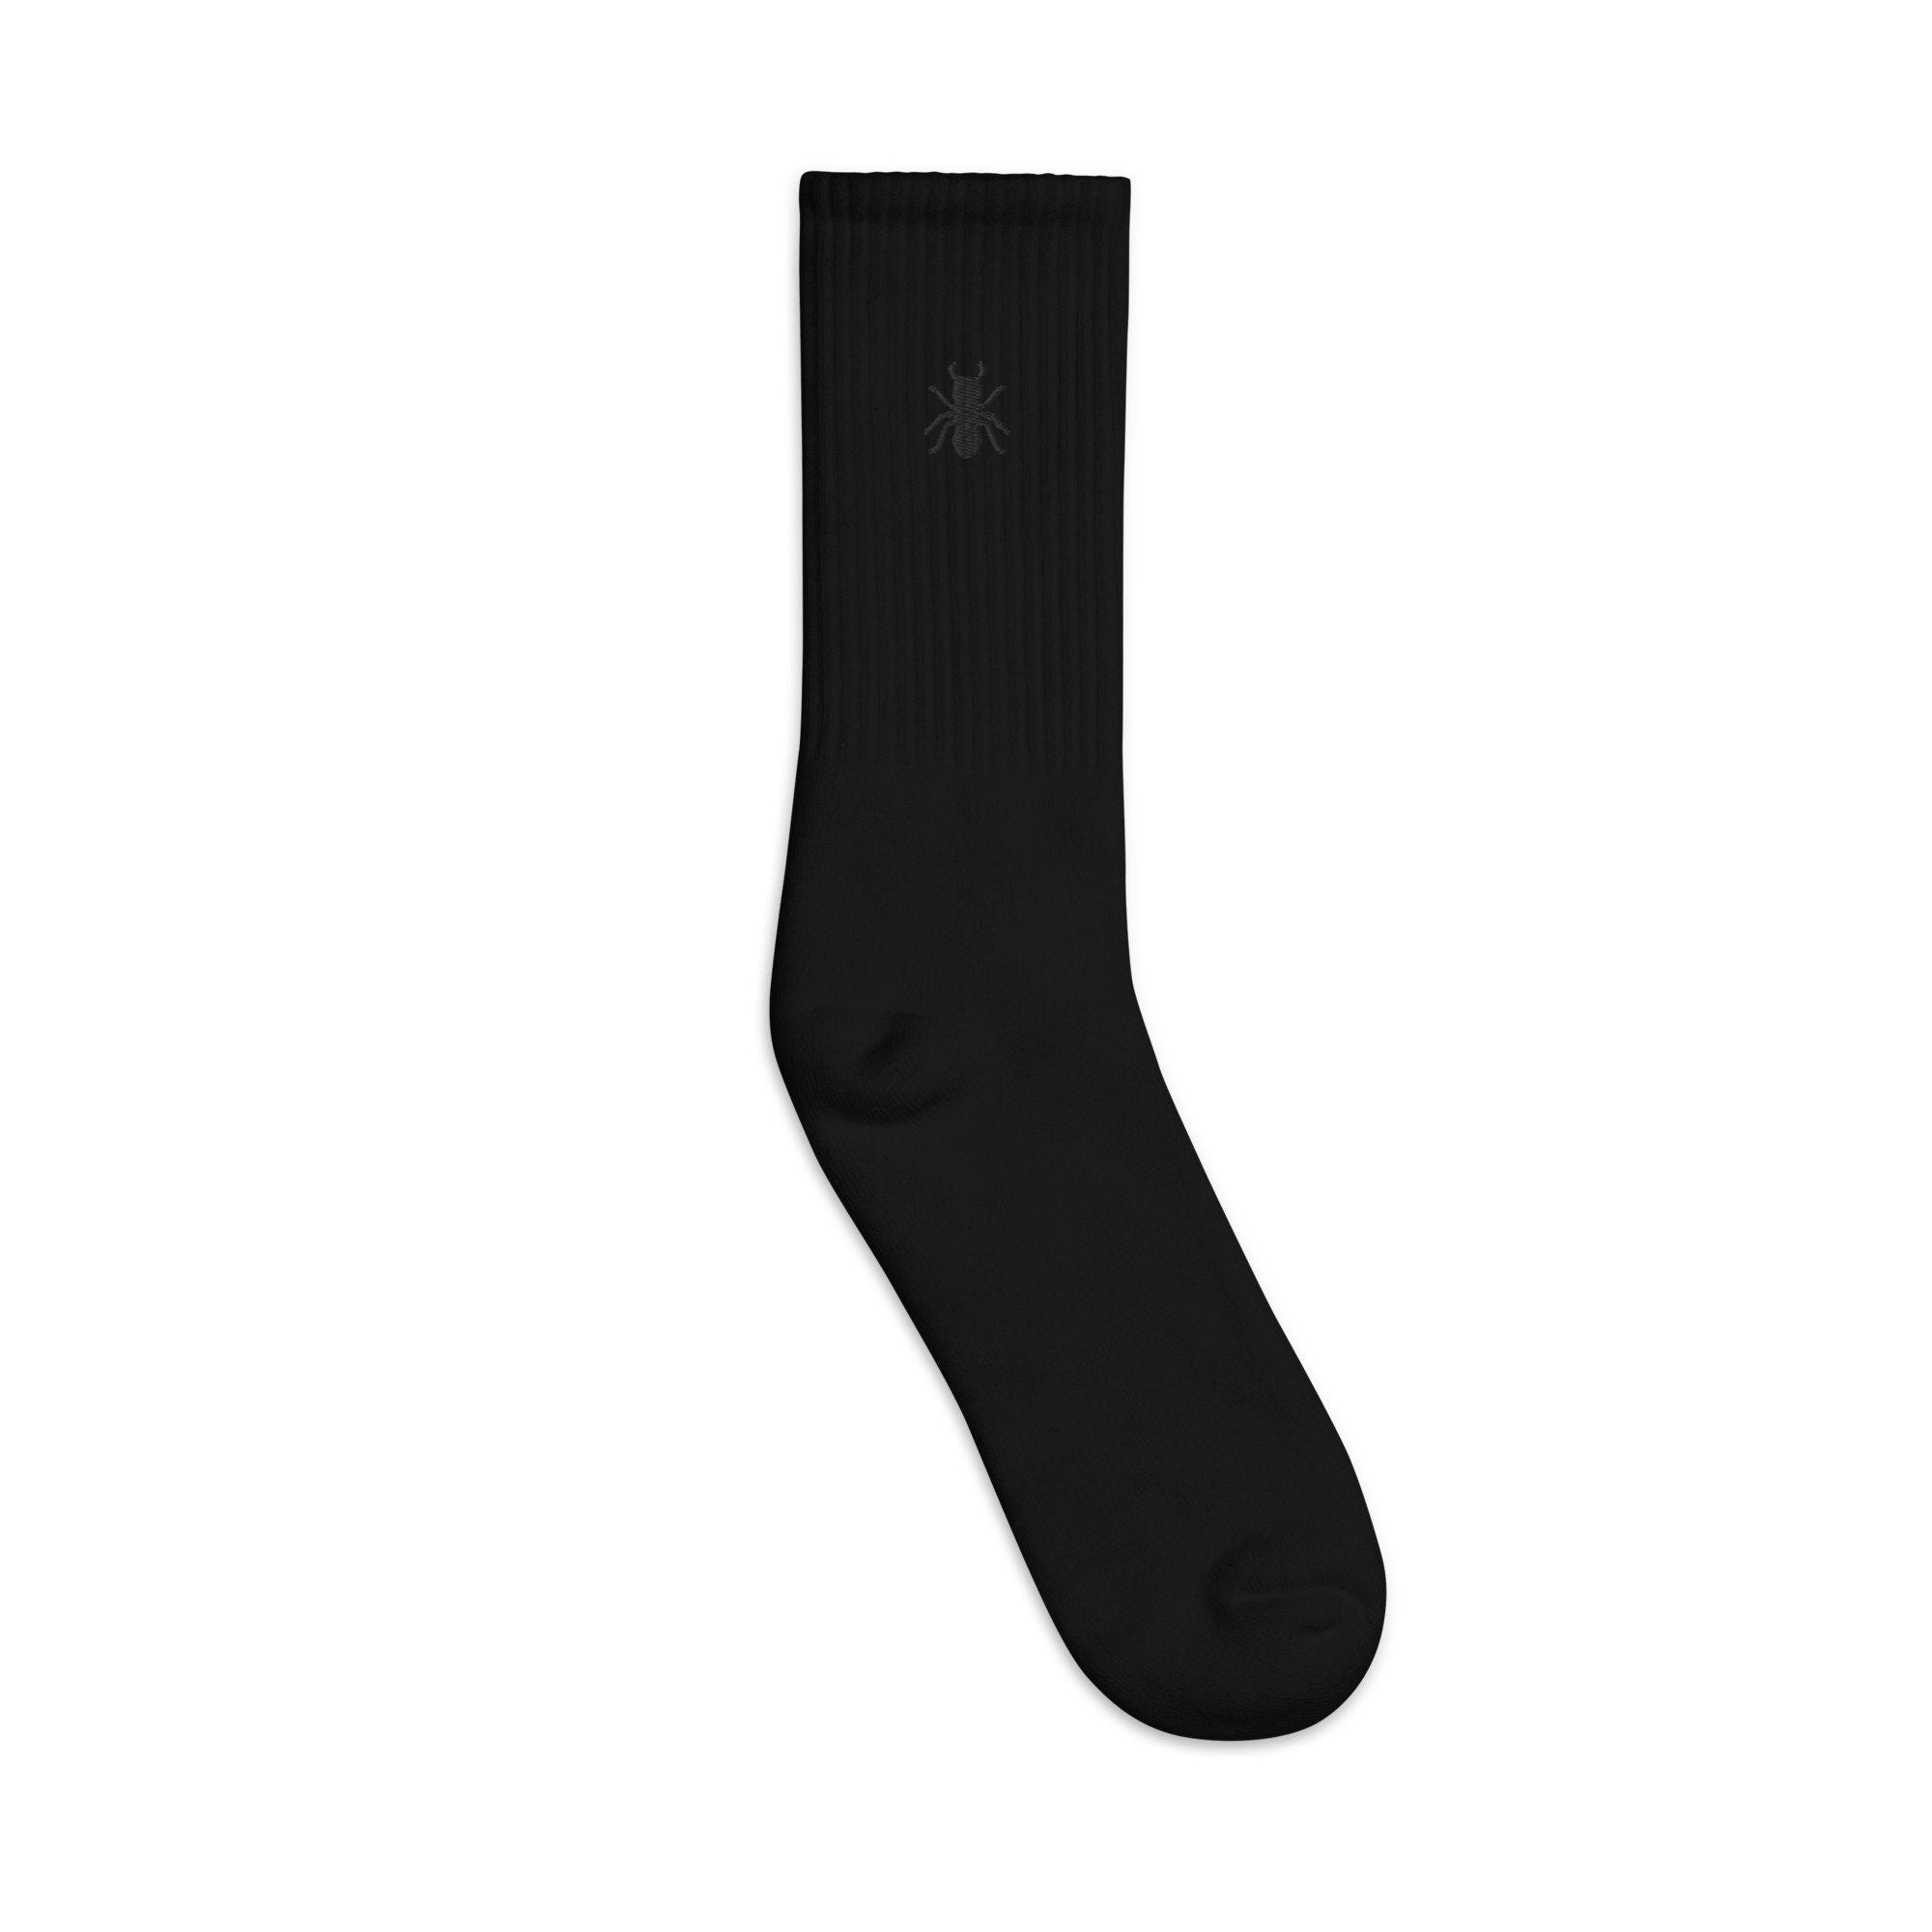 Ant Embroidered Socks, Premium Embroidered Socks, Long Socks Gift - Multiple Colors